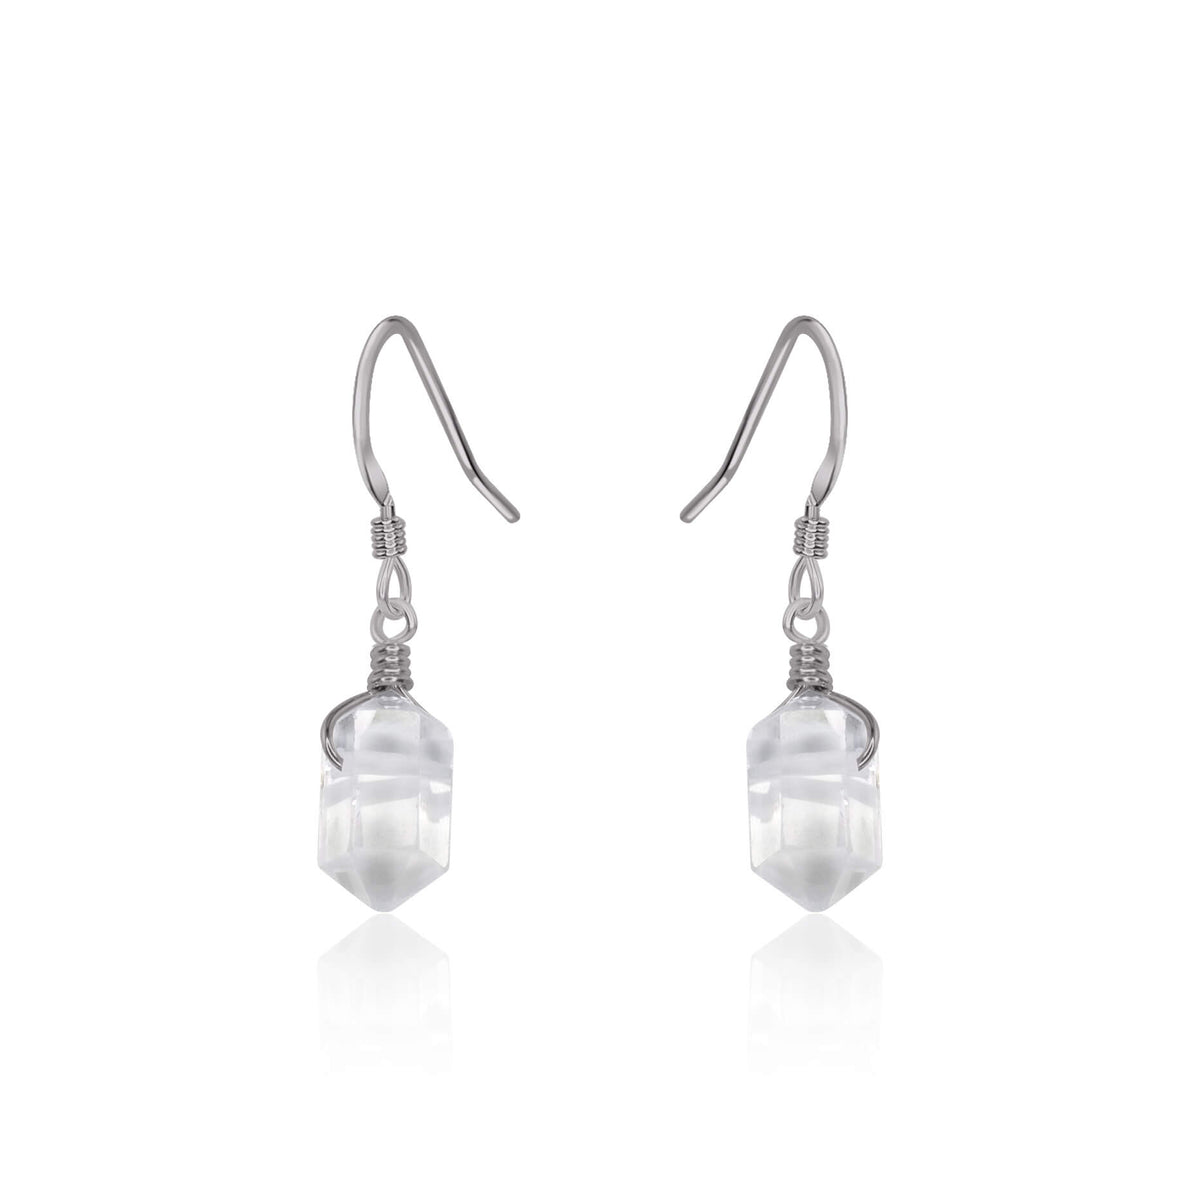 Double Terminated Crystal Dangle Drop Earrings - Crystal Quartz - Stainless Steel - Luna Tide Handmade Jewellery